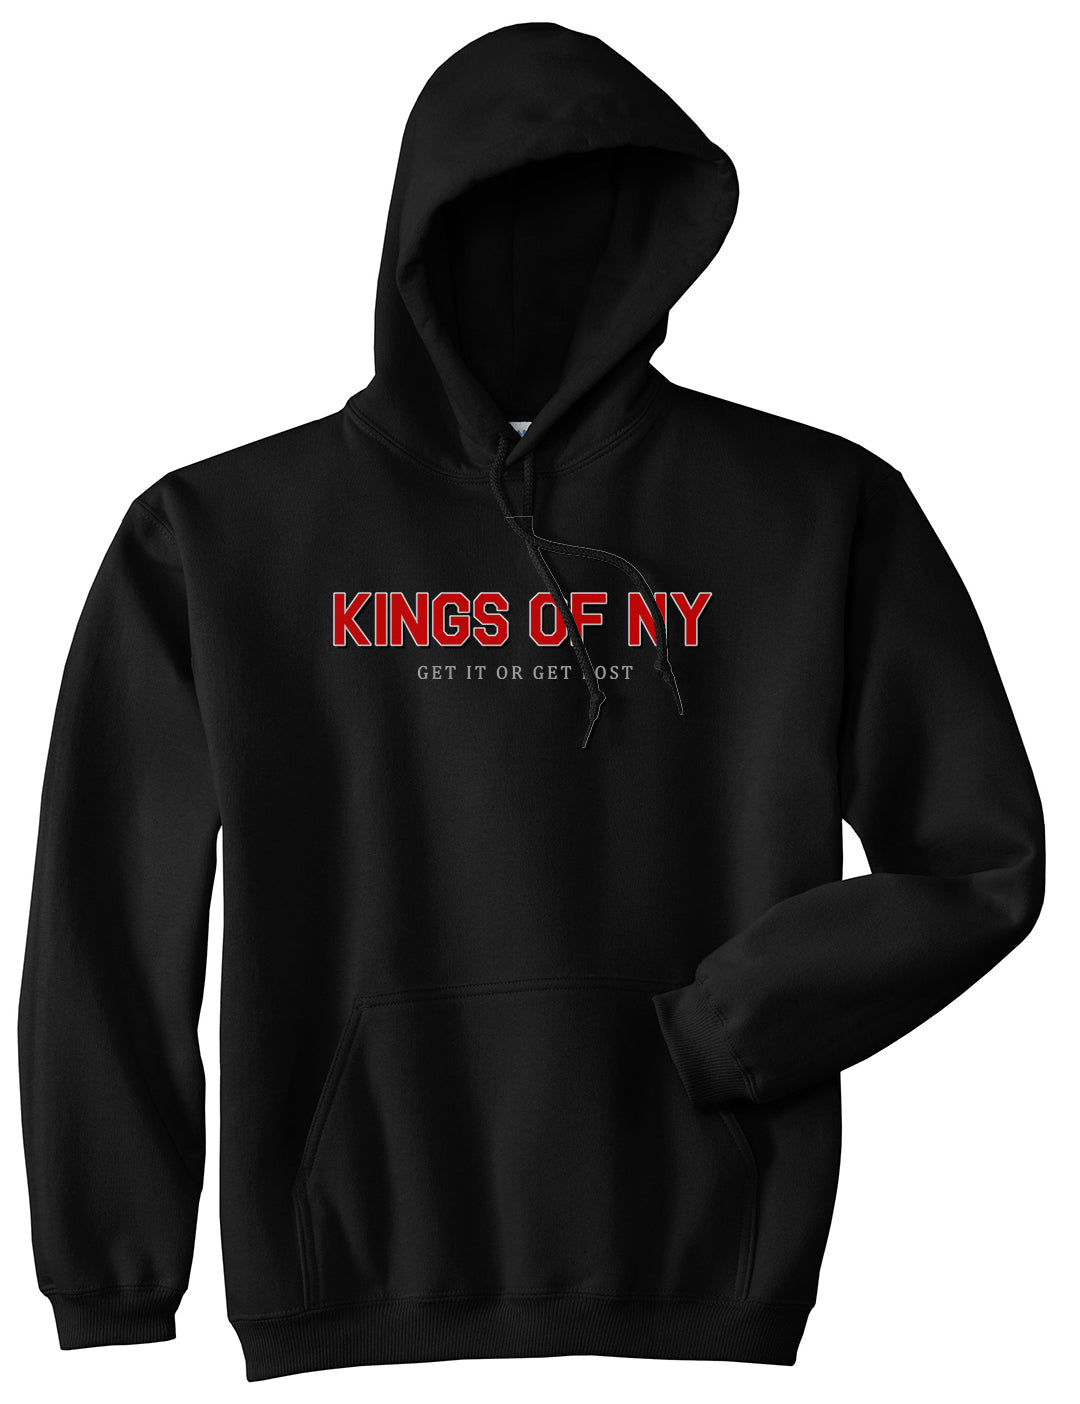 Get It Or Get Lost Mens Pullover Hoodie Black by Kings Of NY